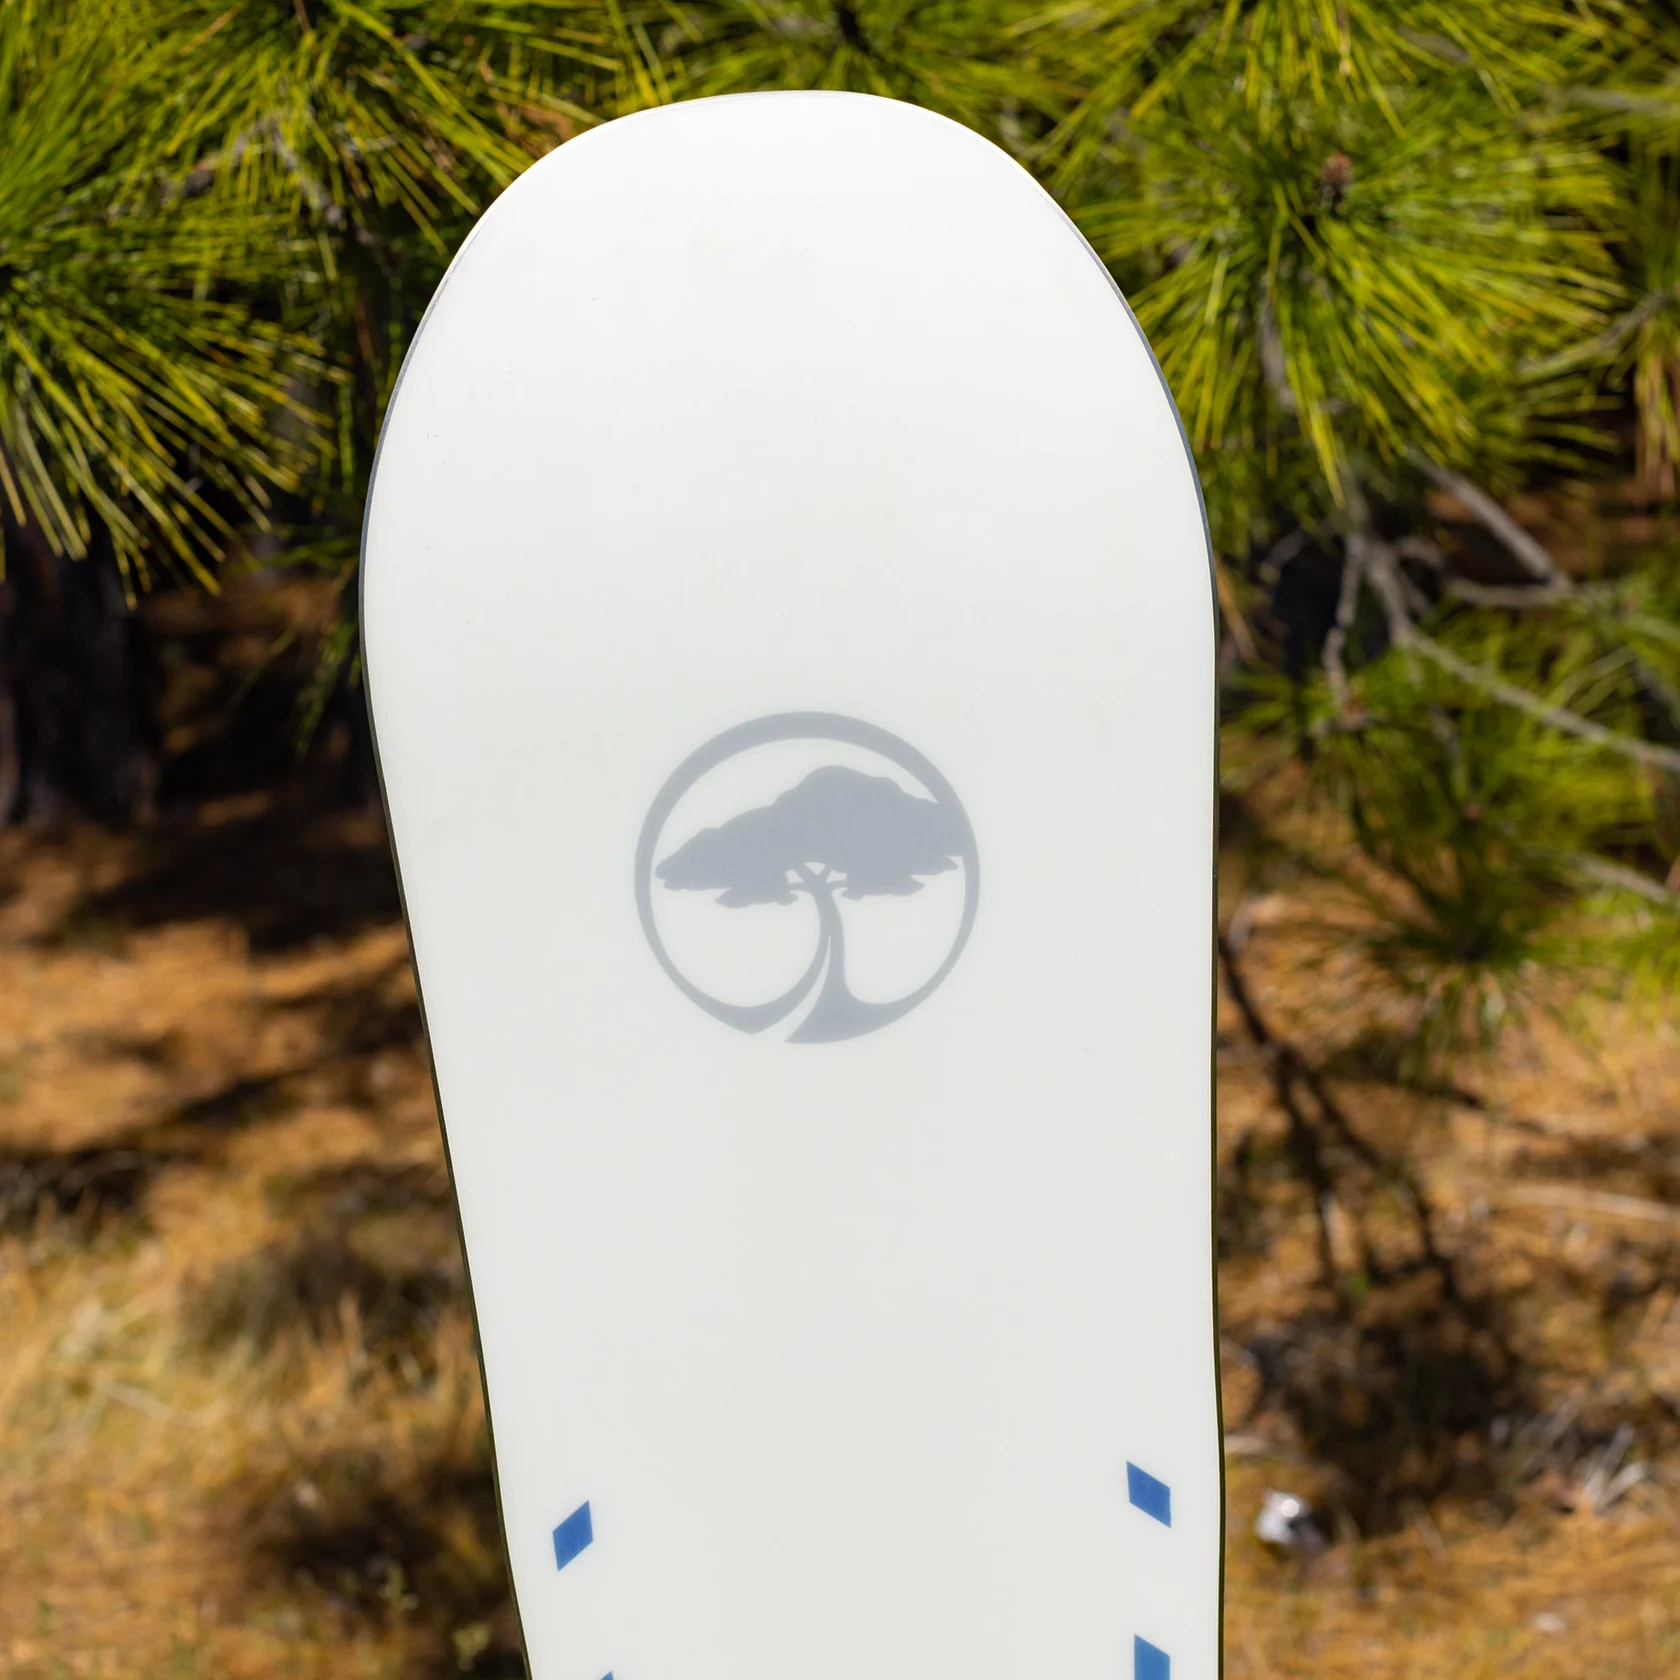 Arbor Mantra Camber snowboard 